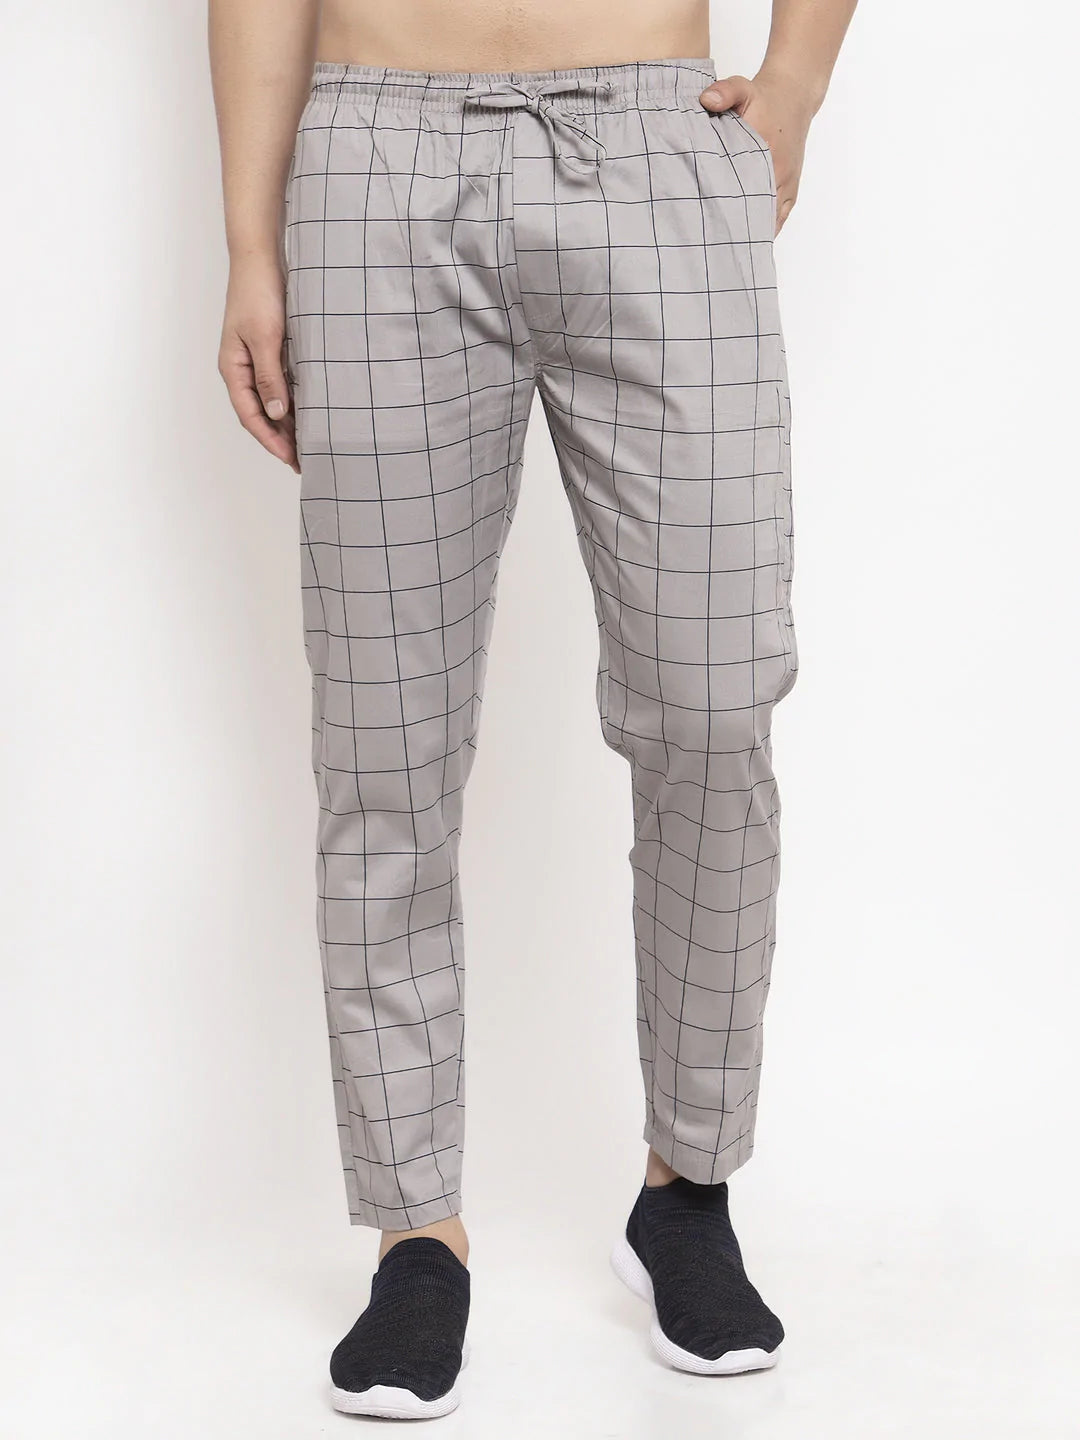 Jainish Men's Grey Checked Cotton Track Pants ( JOG 012Grey )